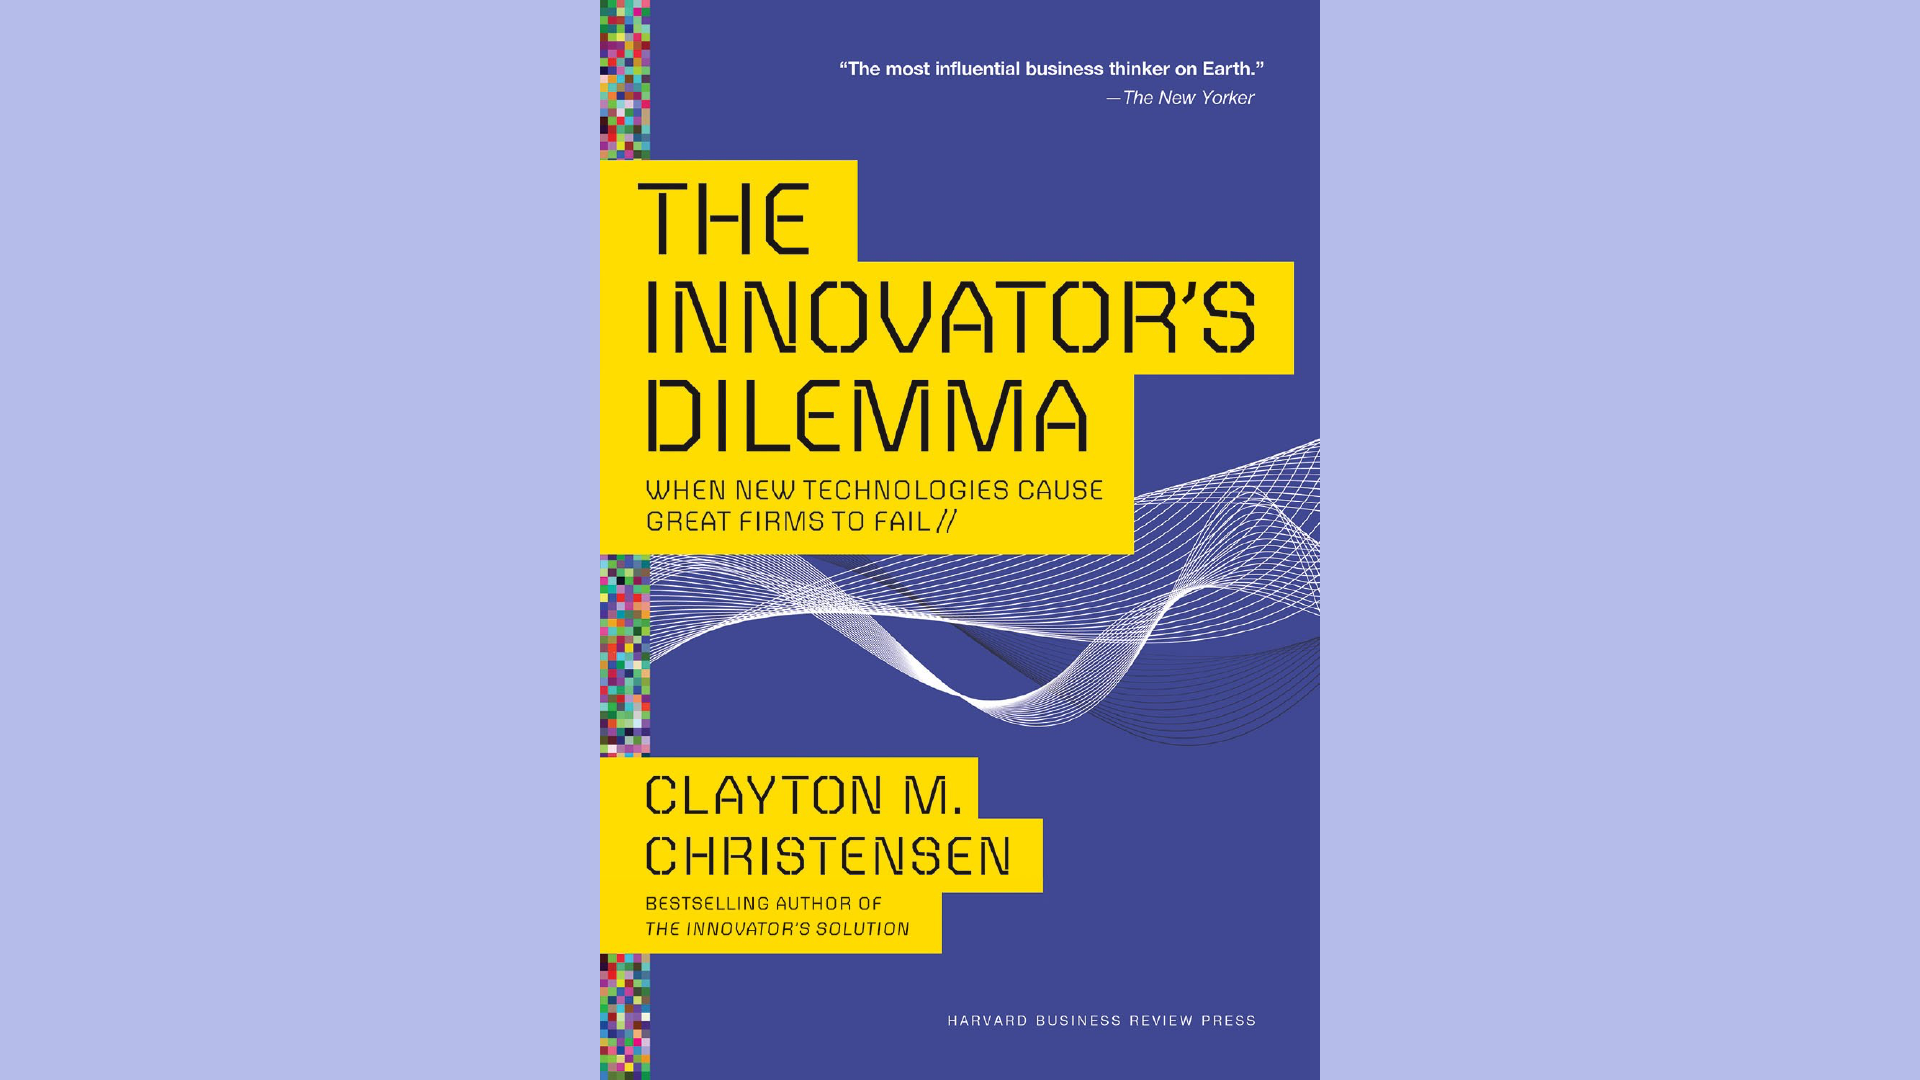 Summary: The Innovator's Dilemma by Clayton Christensen